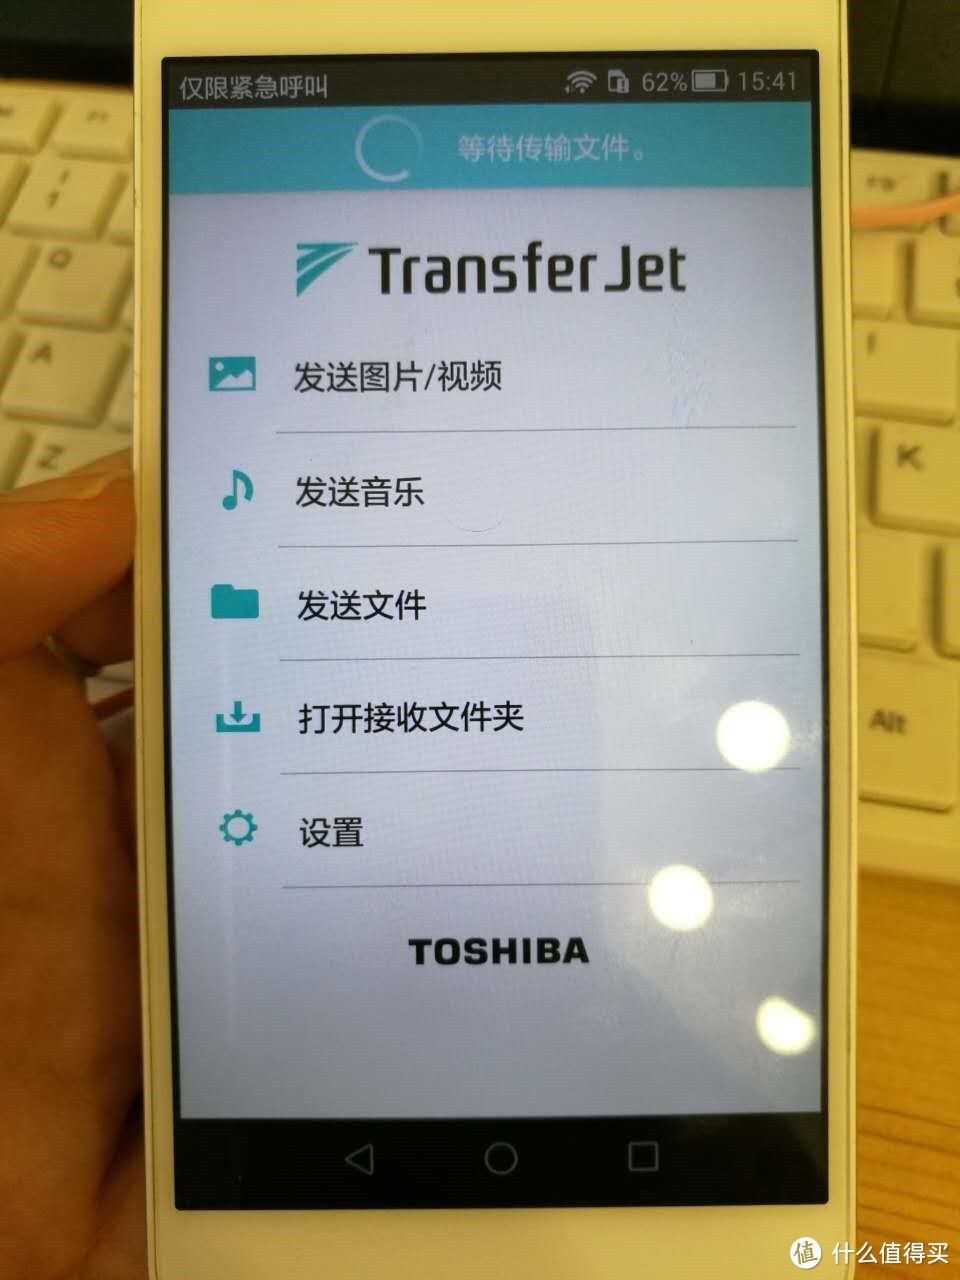 TOSHIBA 东芝 TransferJet 适配器 用后分享